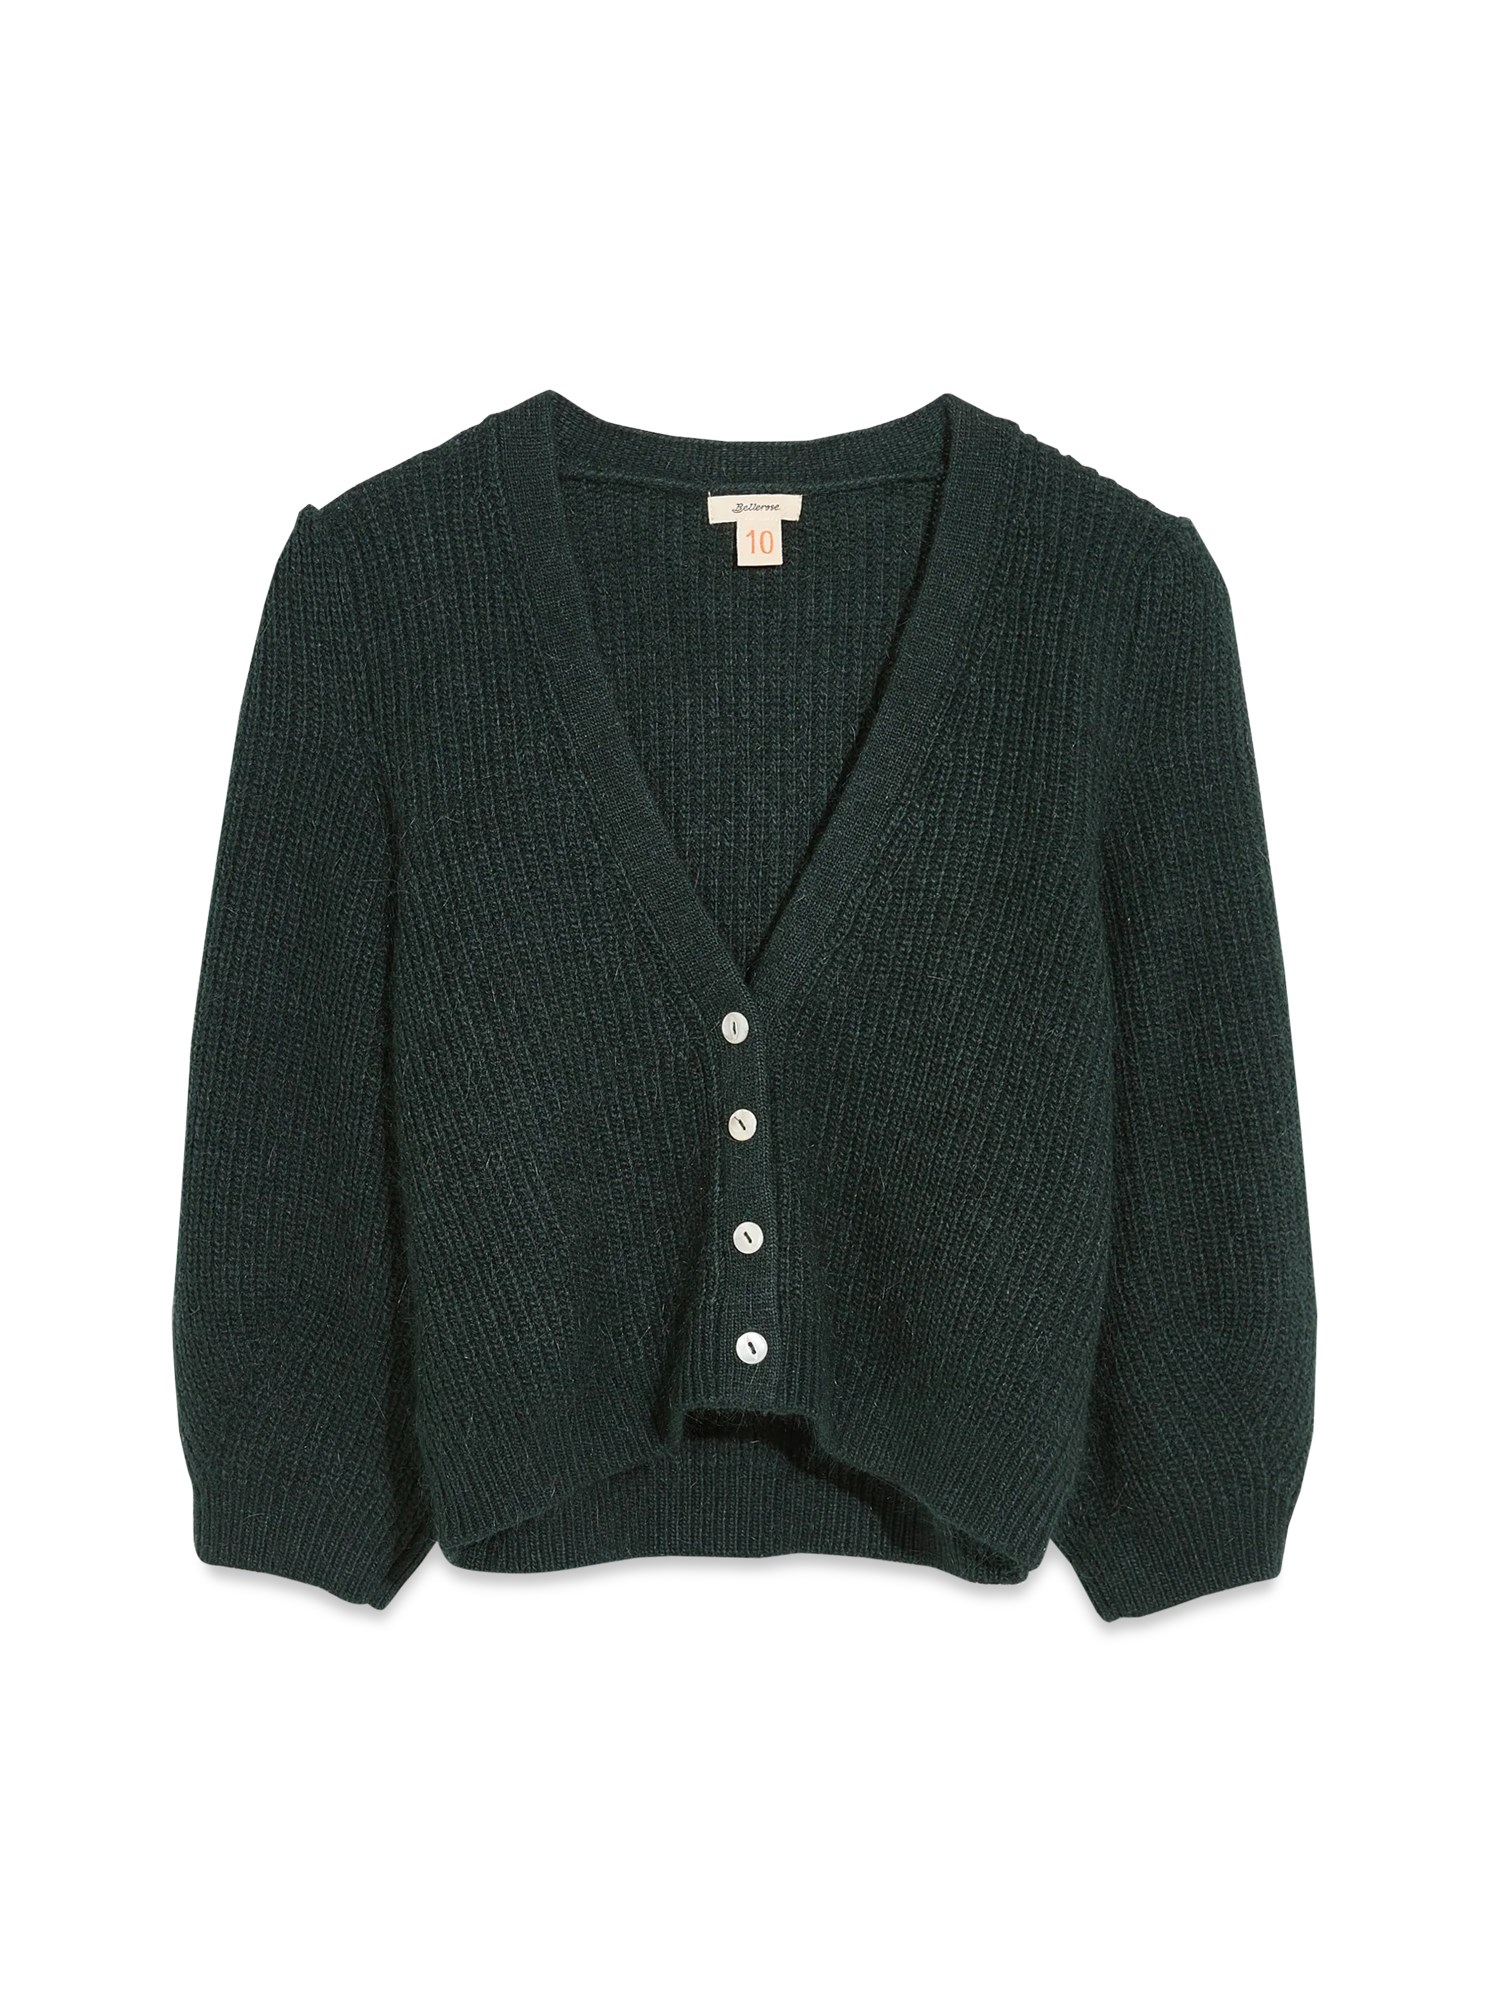 bellerose forest green sweater